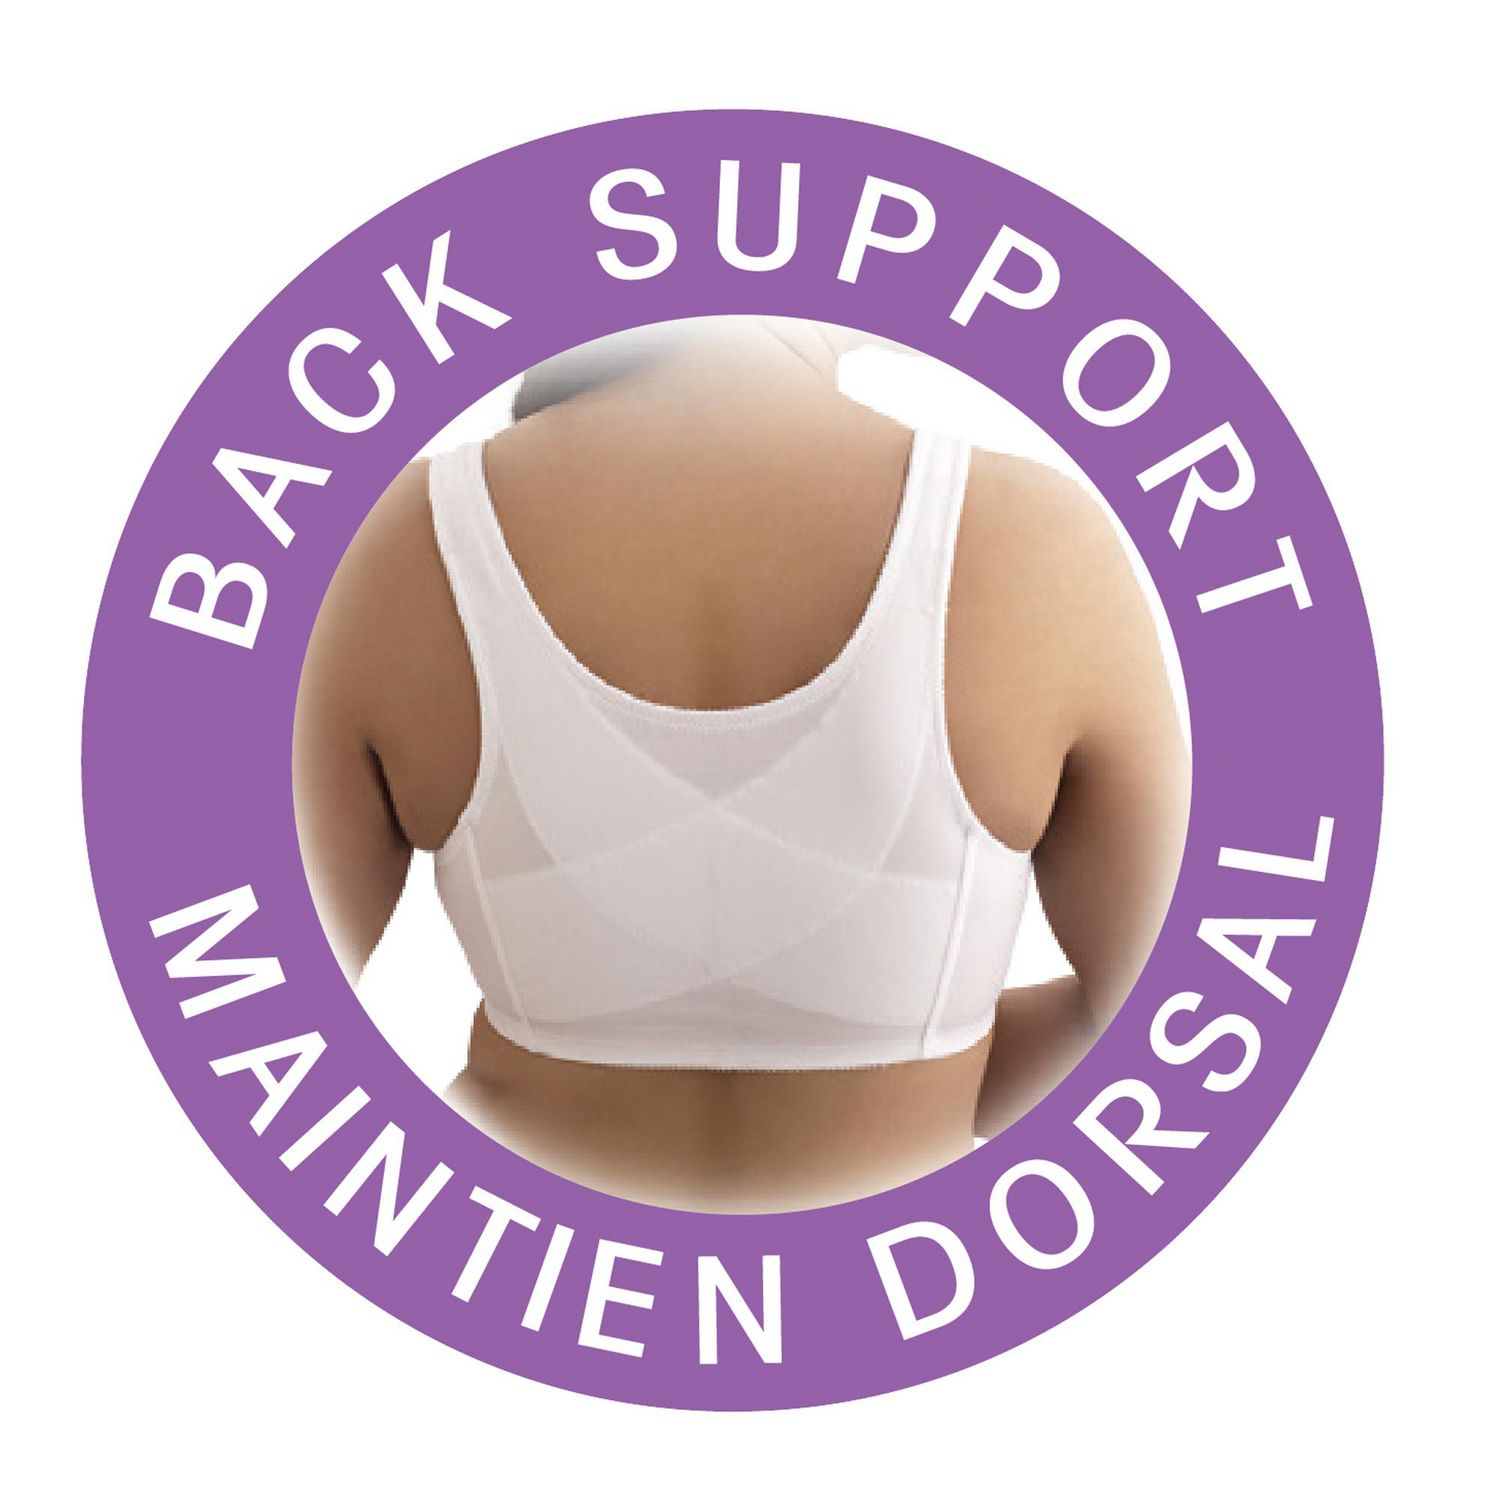 Posture support bra • Compare & find best price now »